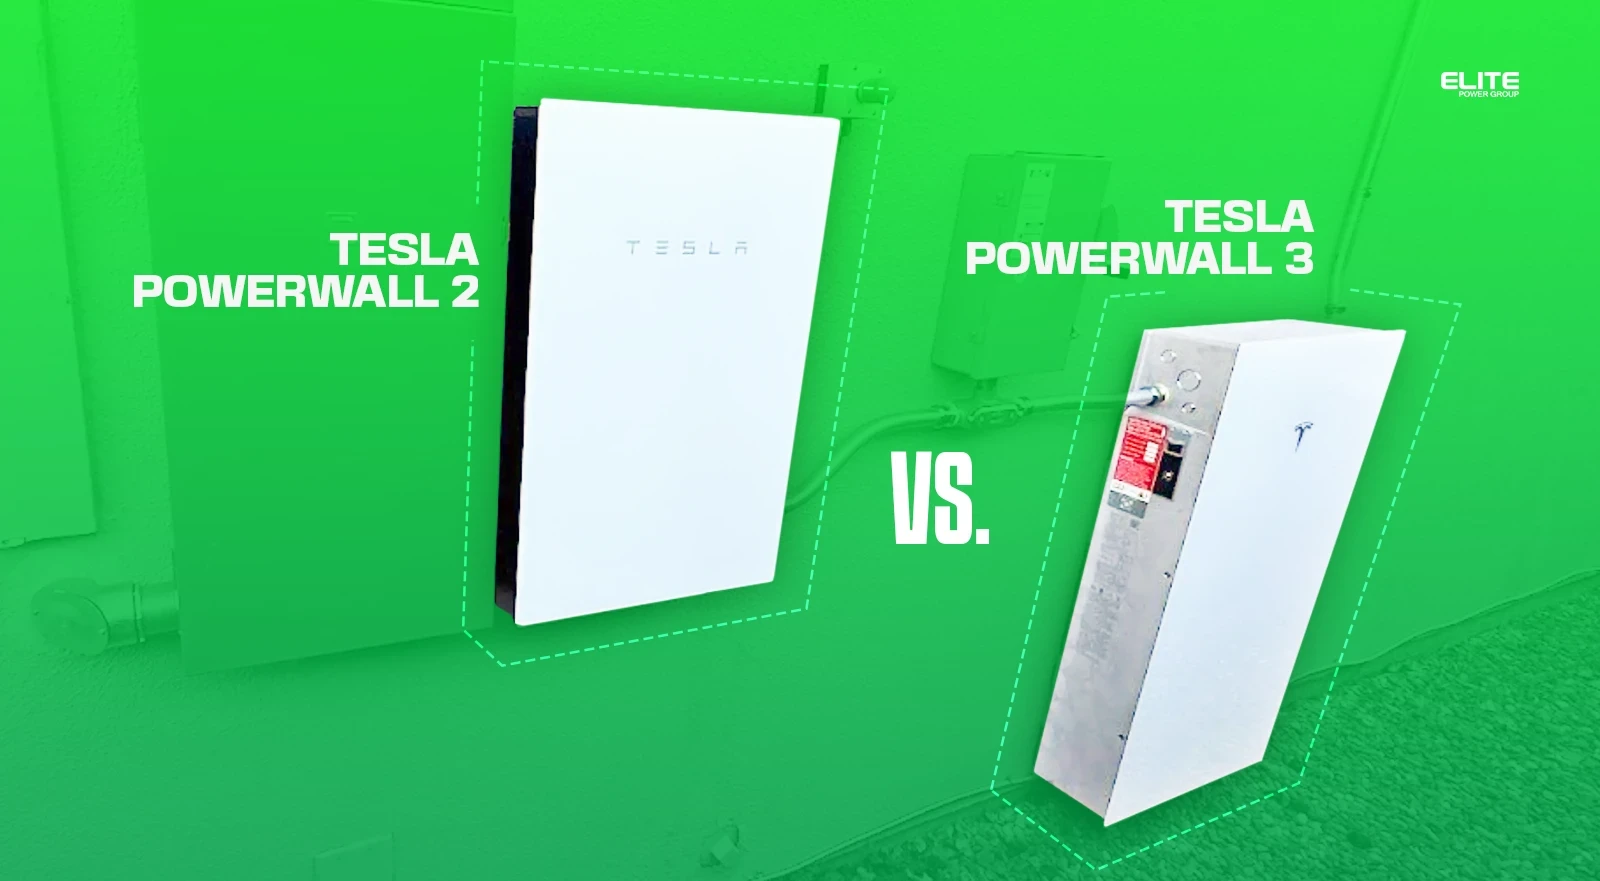 Tesla Powerwall 2 vs. Powerwall 3 comparison specifications